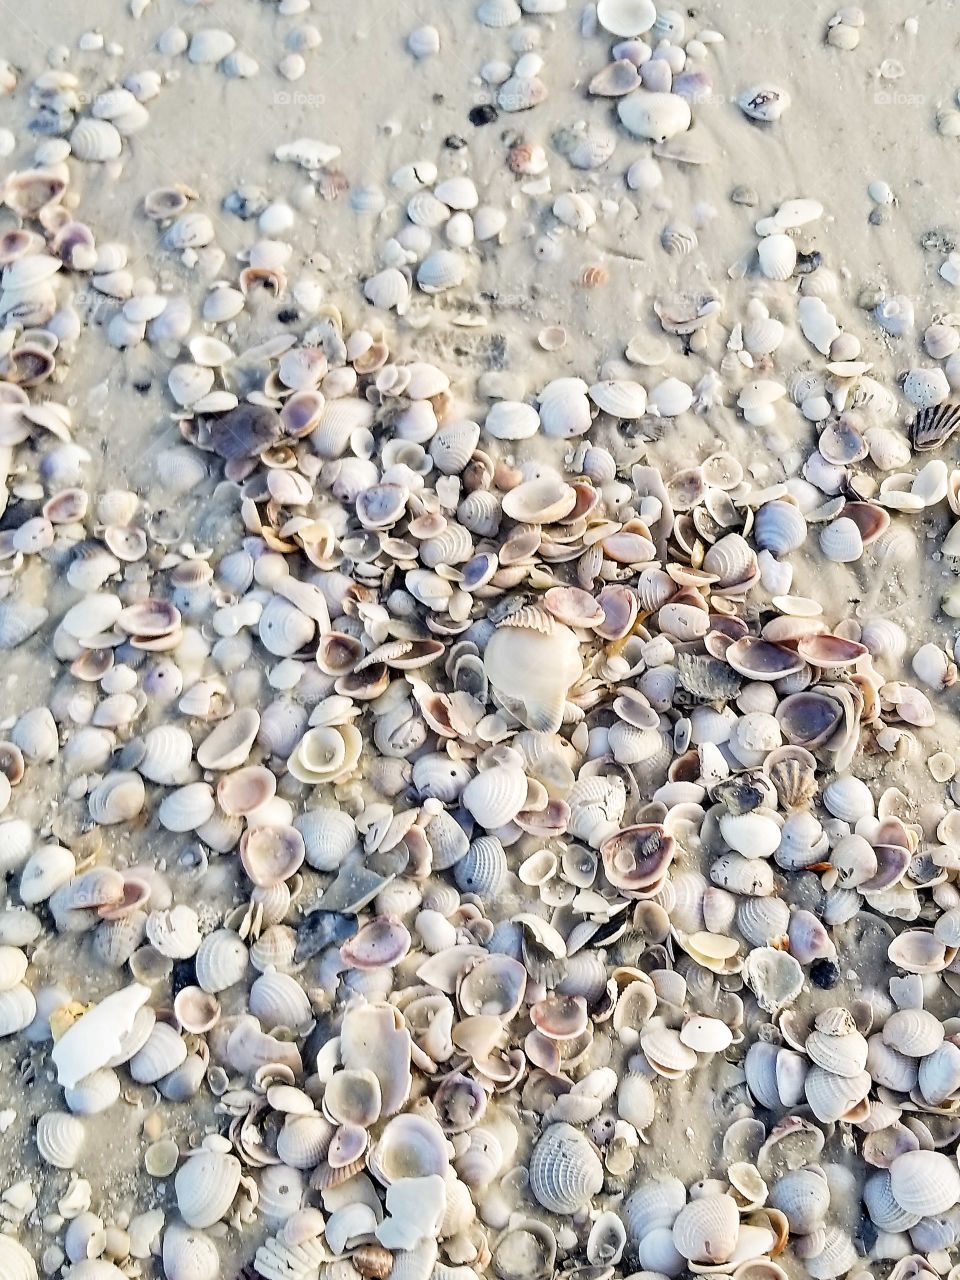 Seashells galore